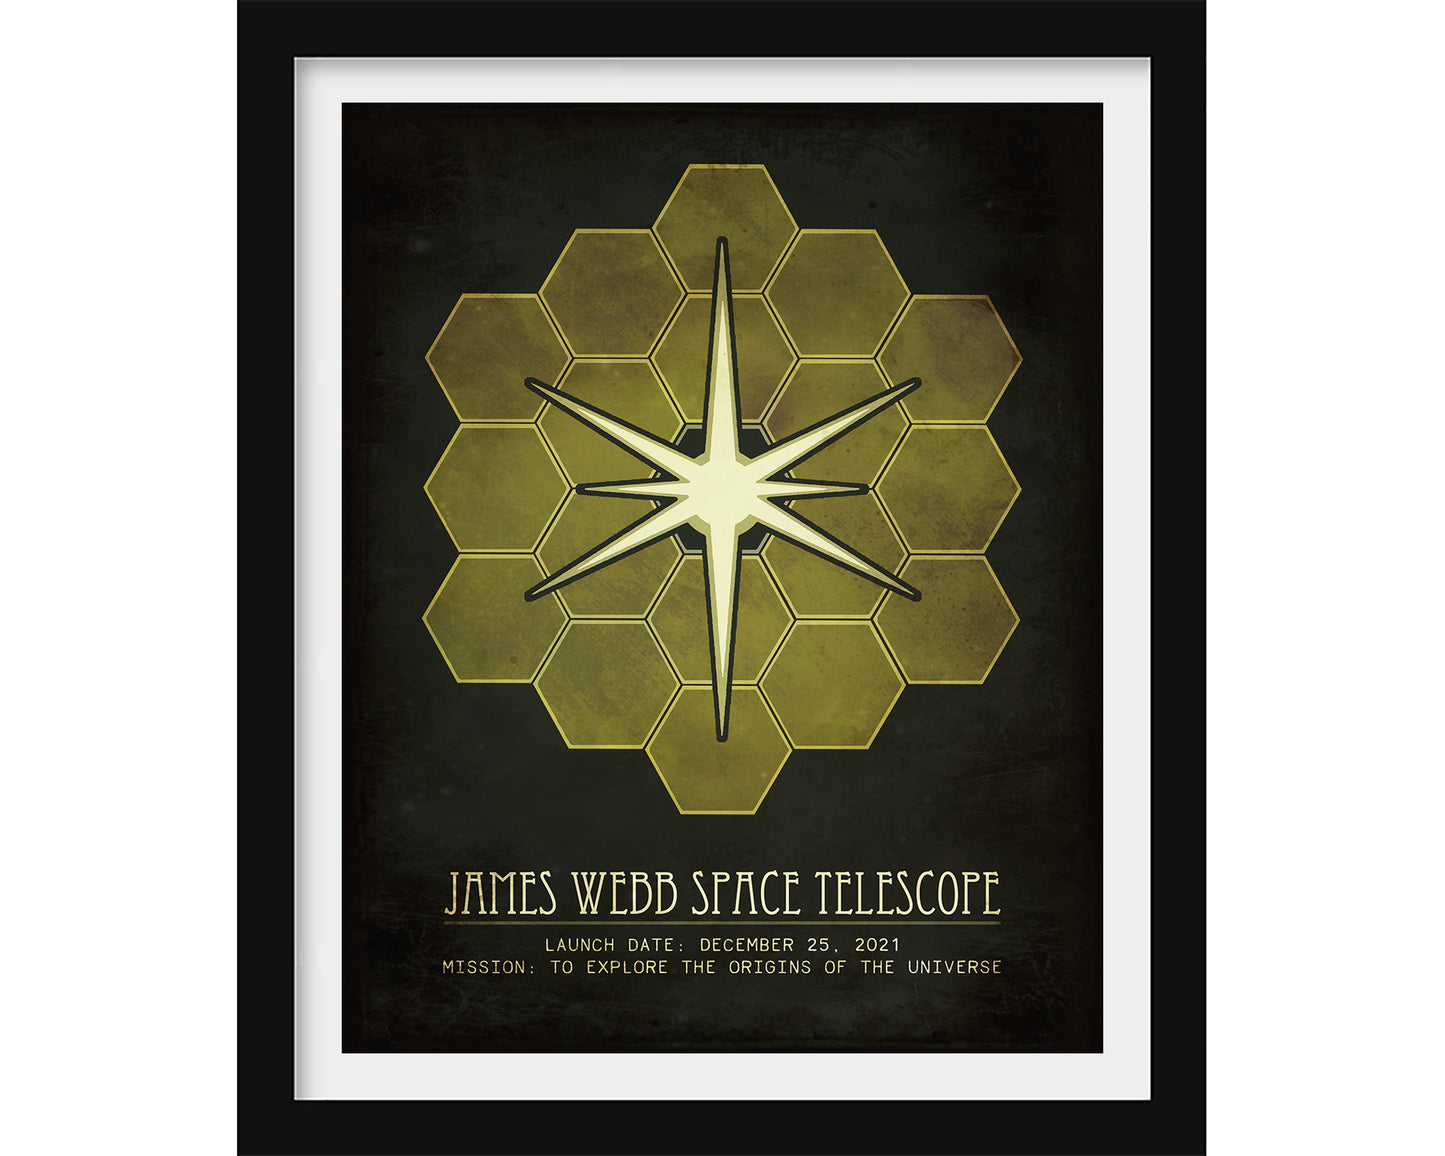 Stylish astronomy art print featuring the James Webb Space Telescope